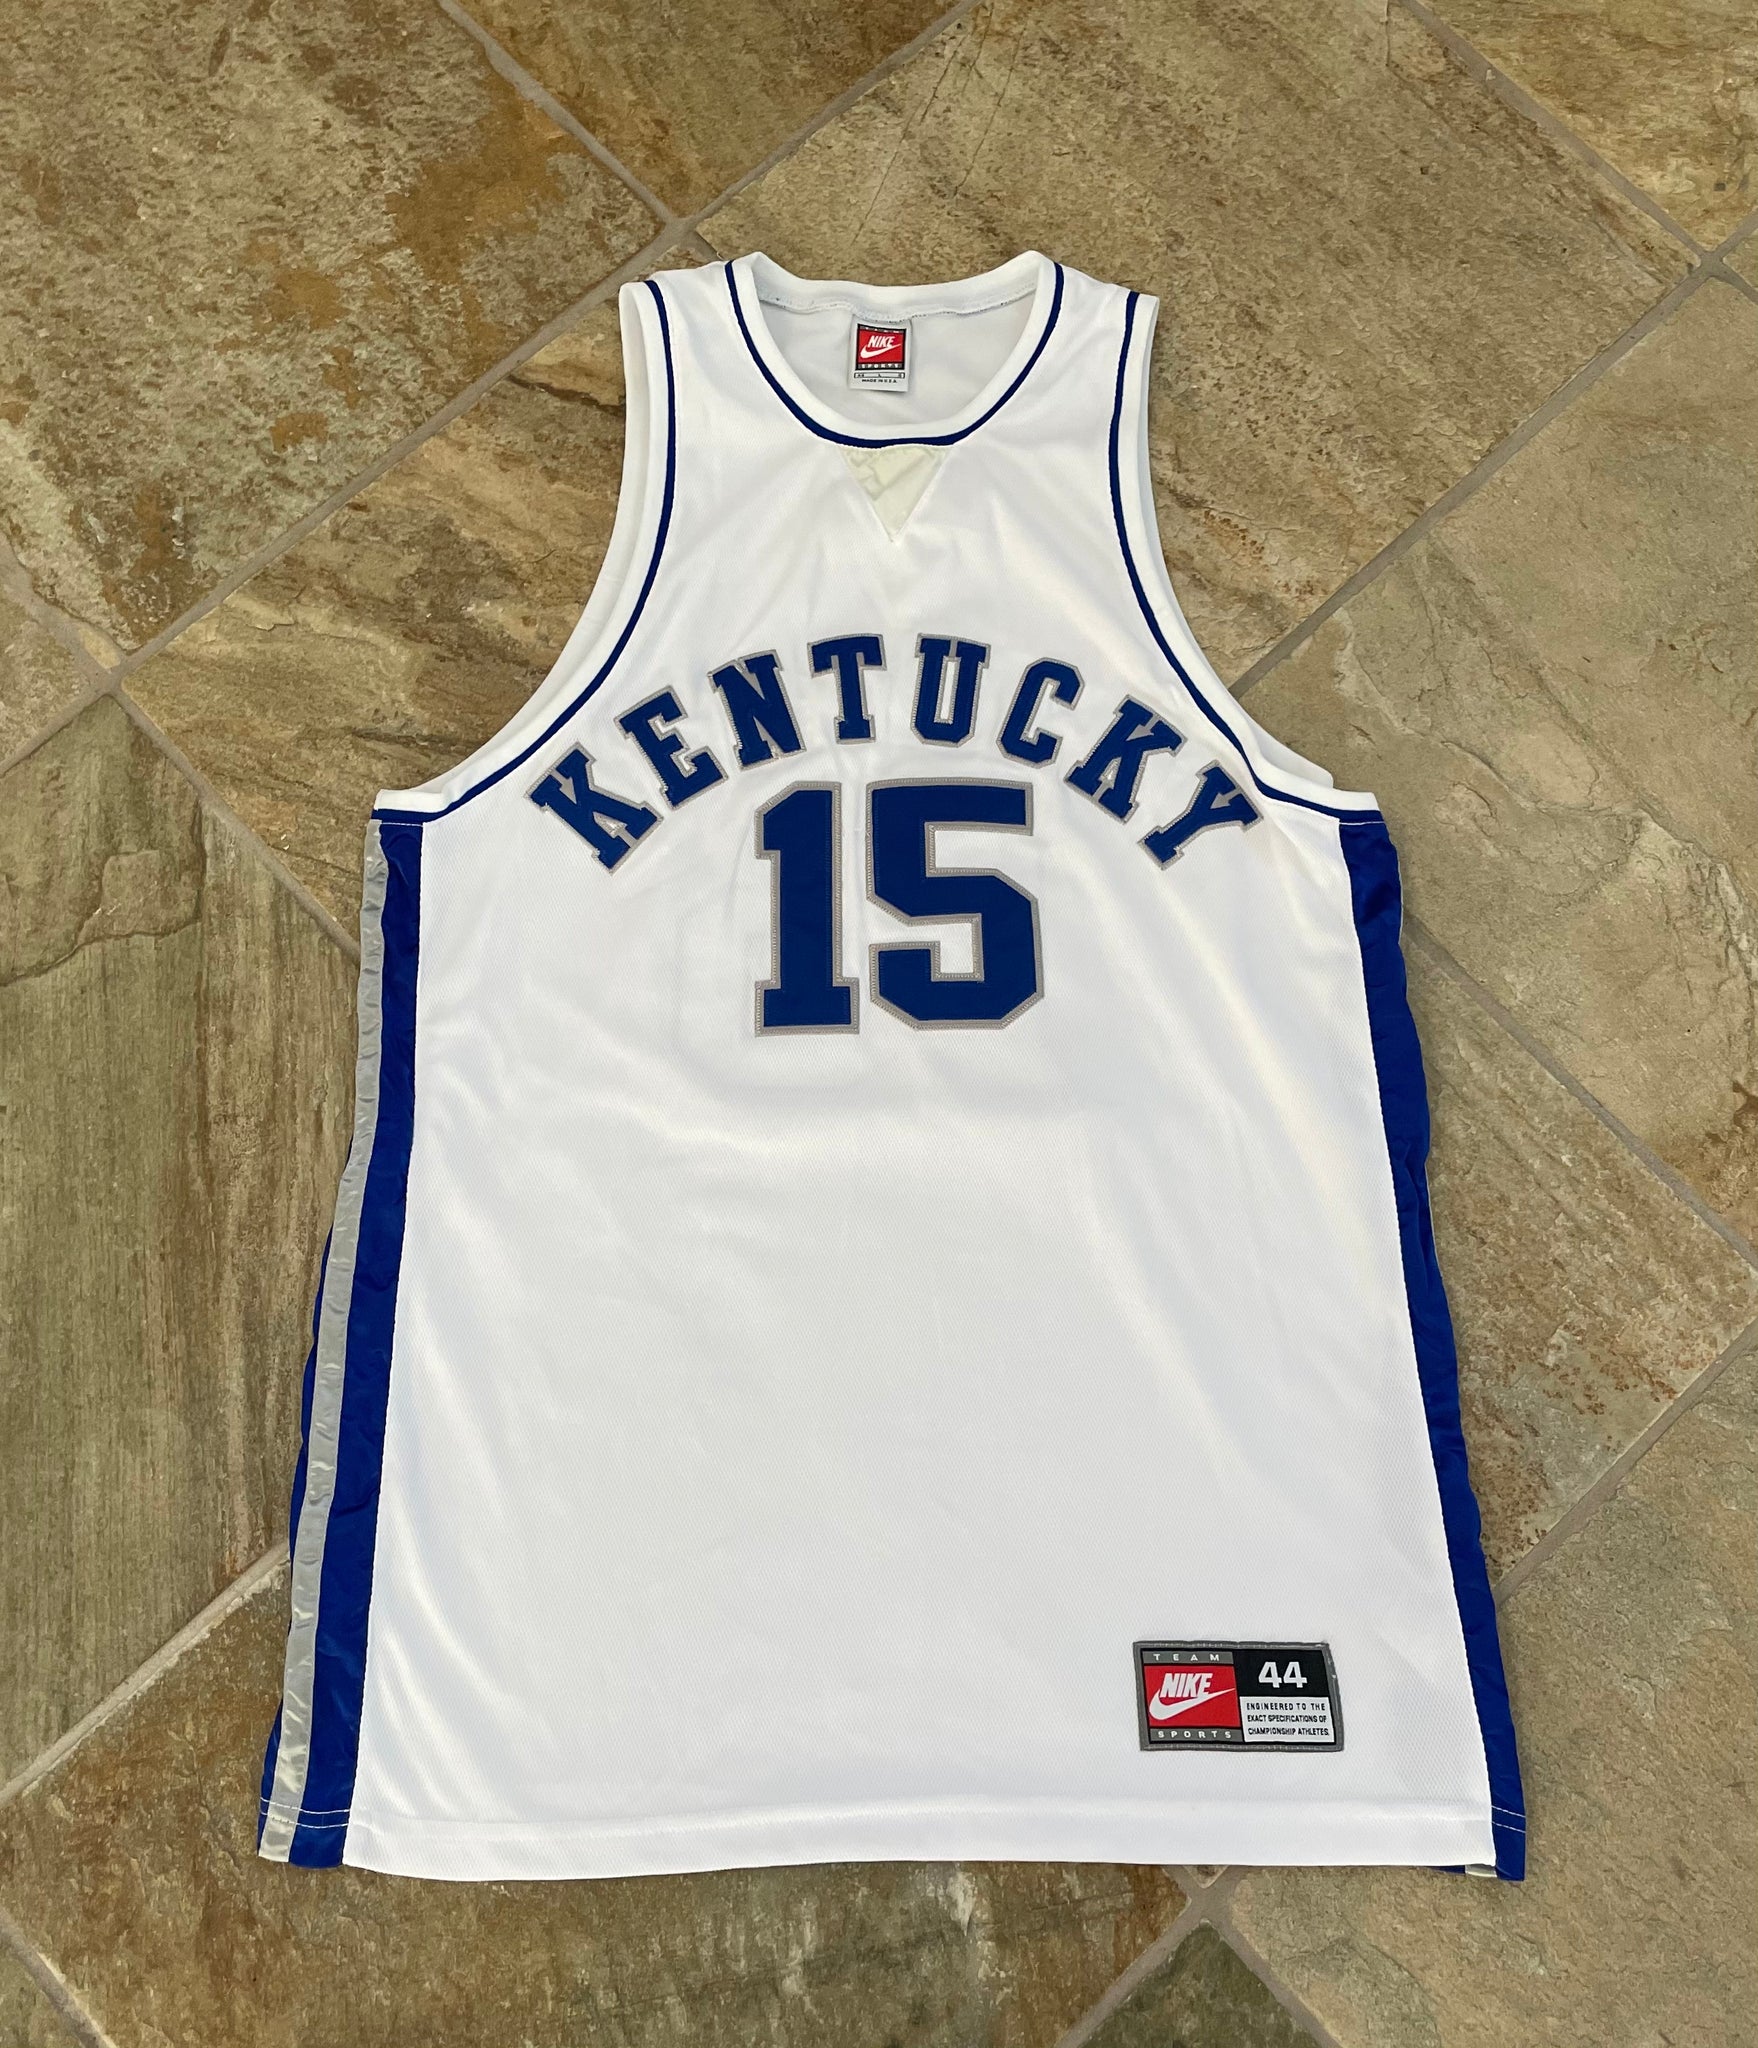 Kentucky Wildcats Authentic NCAA Basketball Jersey (Size XL)